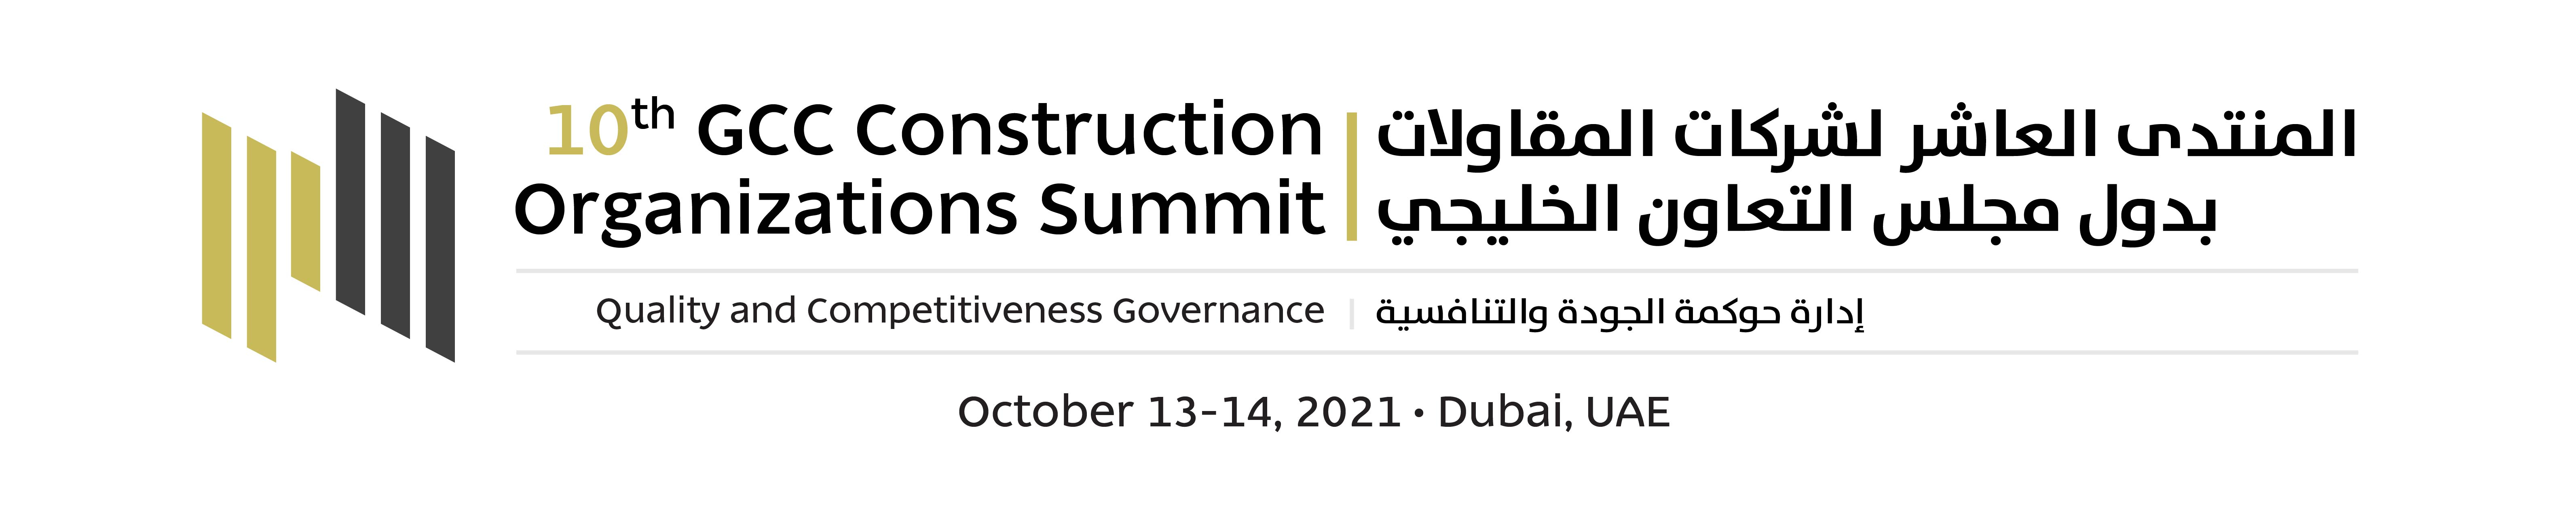 11th GCC Construction Summit